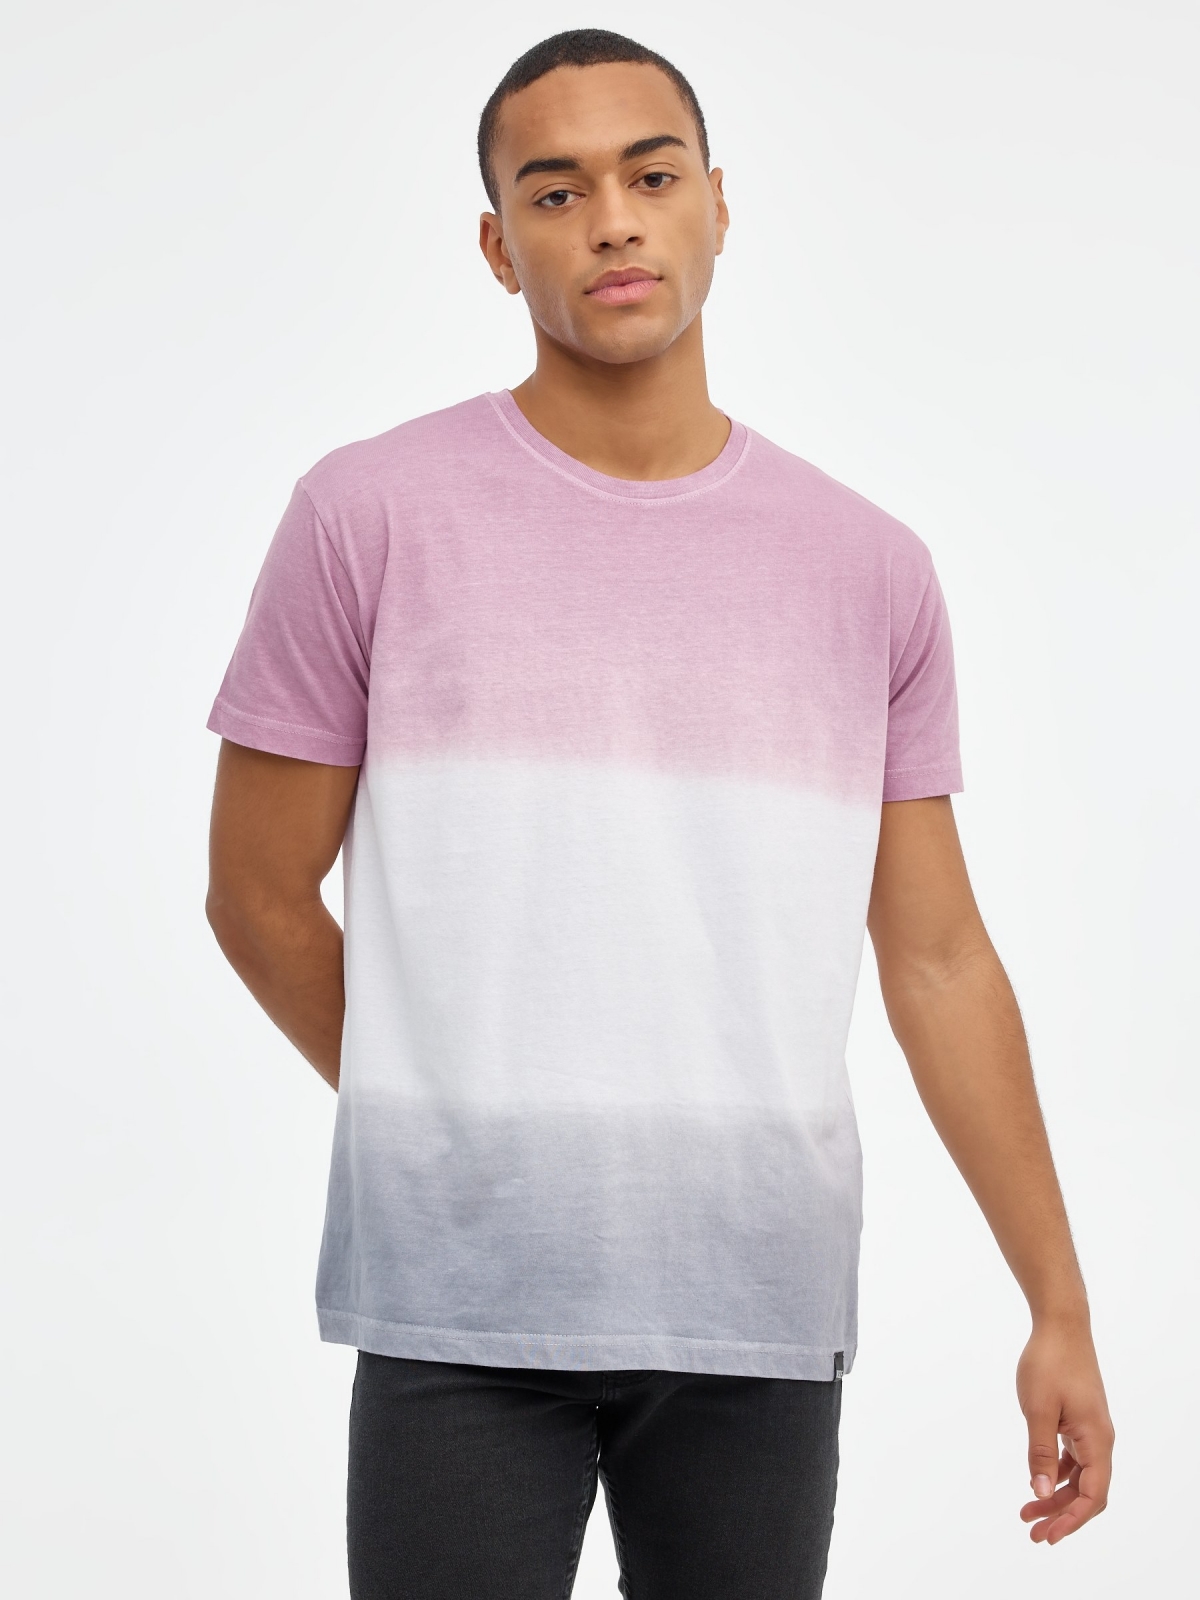 T-shirt degradada Tie&Dye púrpura vista meia frontal